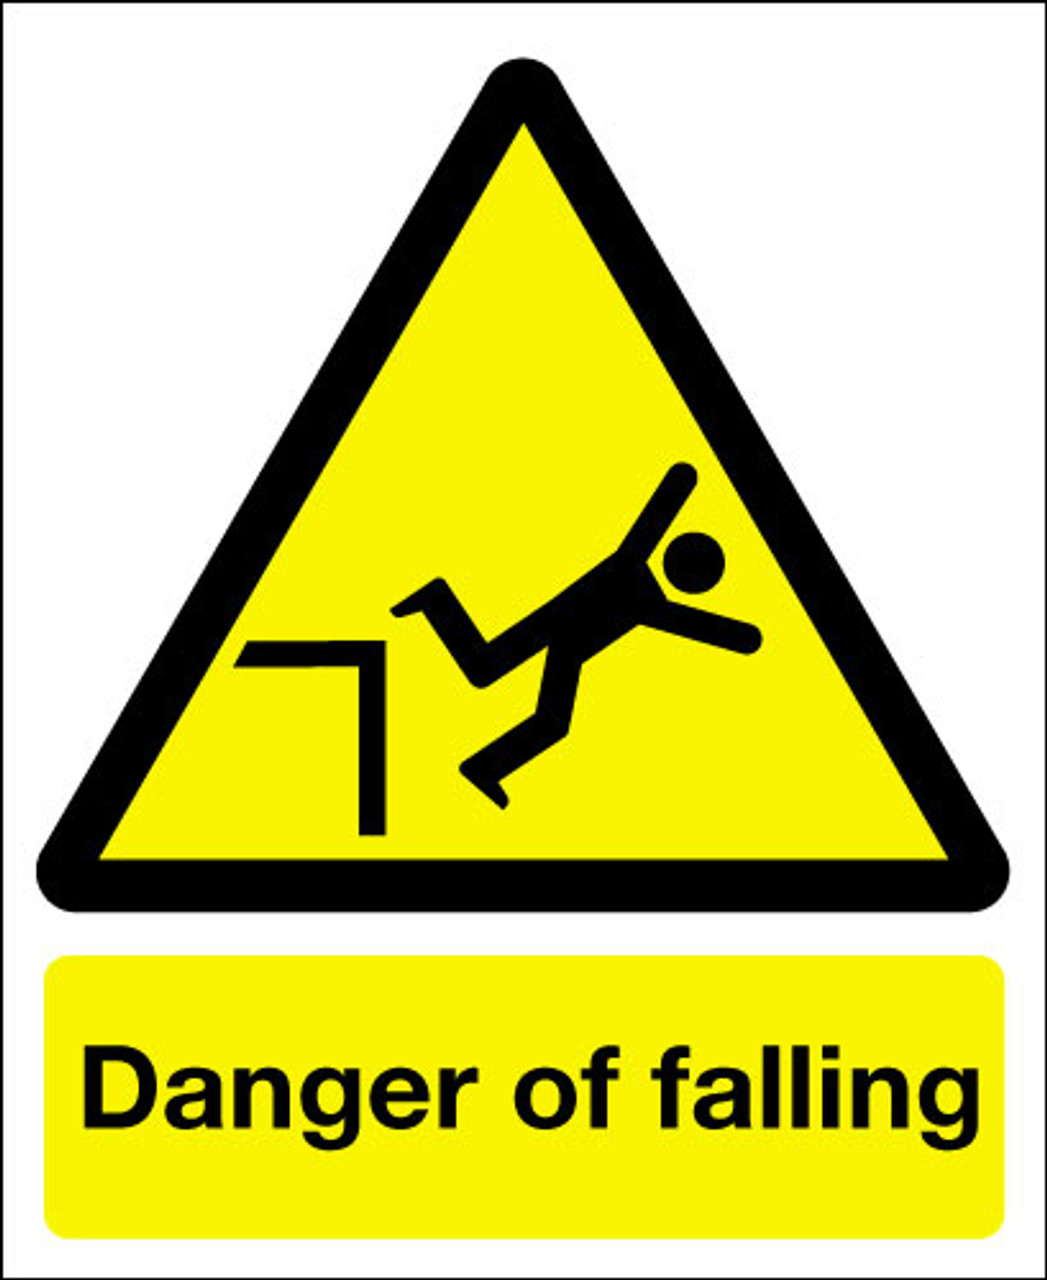 Falling For Danger Ch 16 Danger of falling sign - Signs 2 Safety